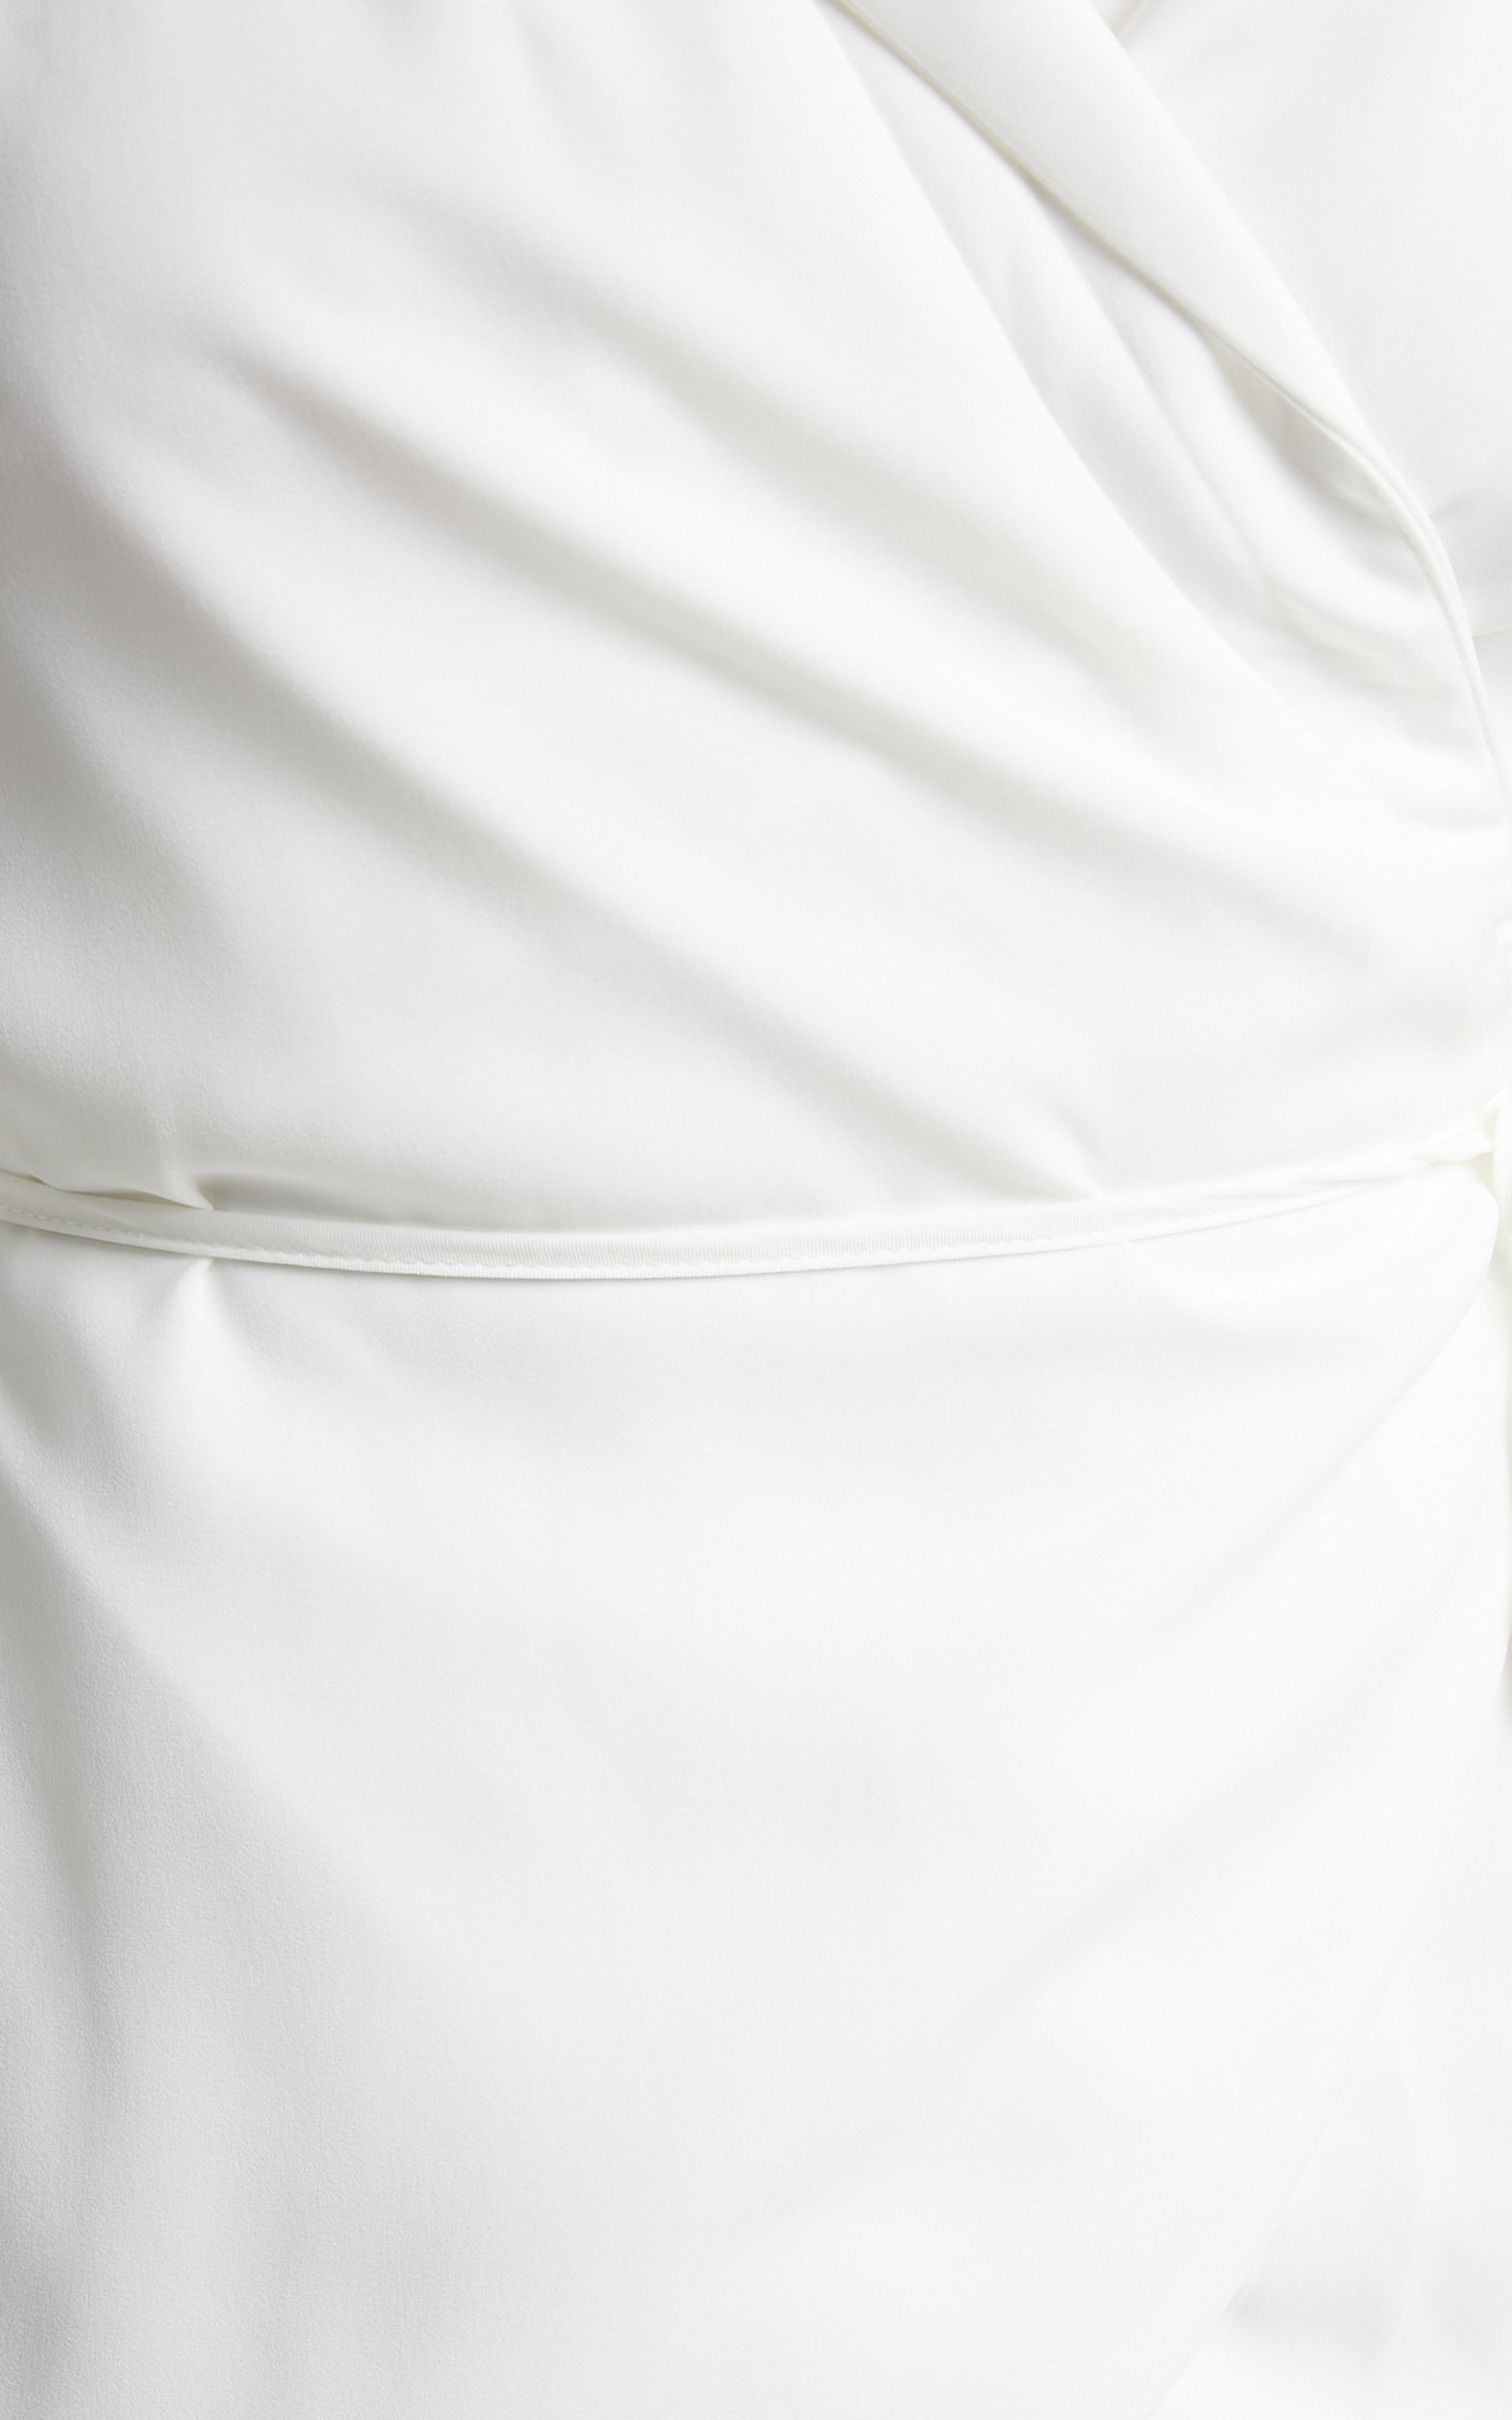 Runaway The Label - Premangela Dress in White | Showpo USA